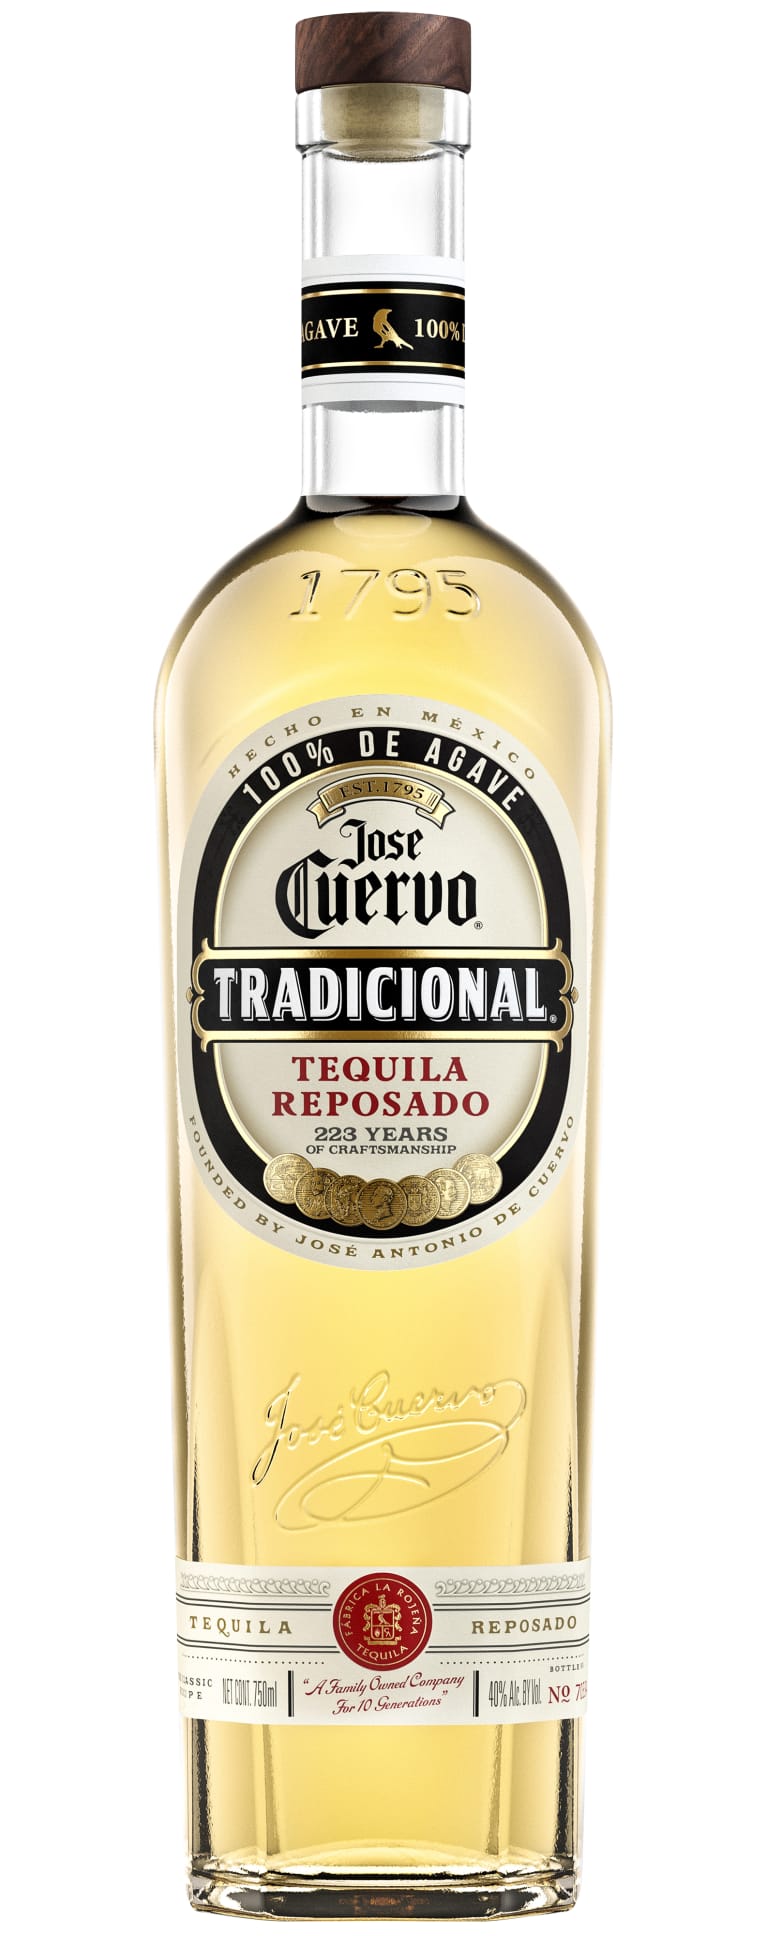 Jose Cuervo Tequila Tradicional Reposado Limited Edition